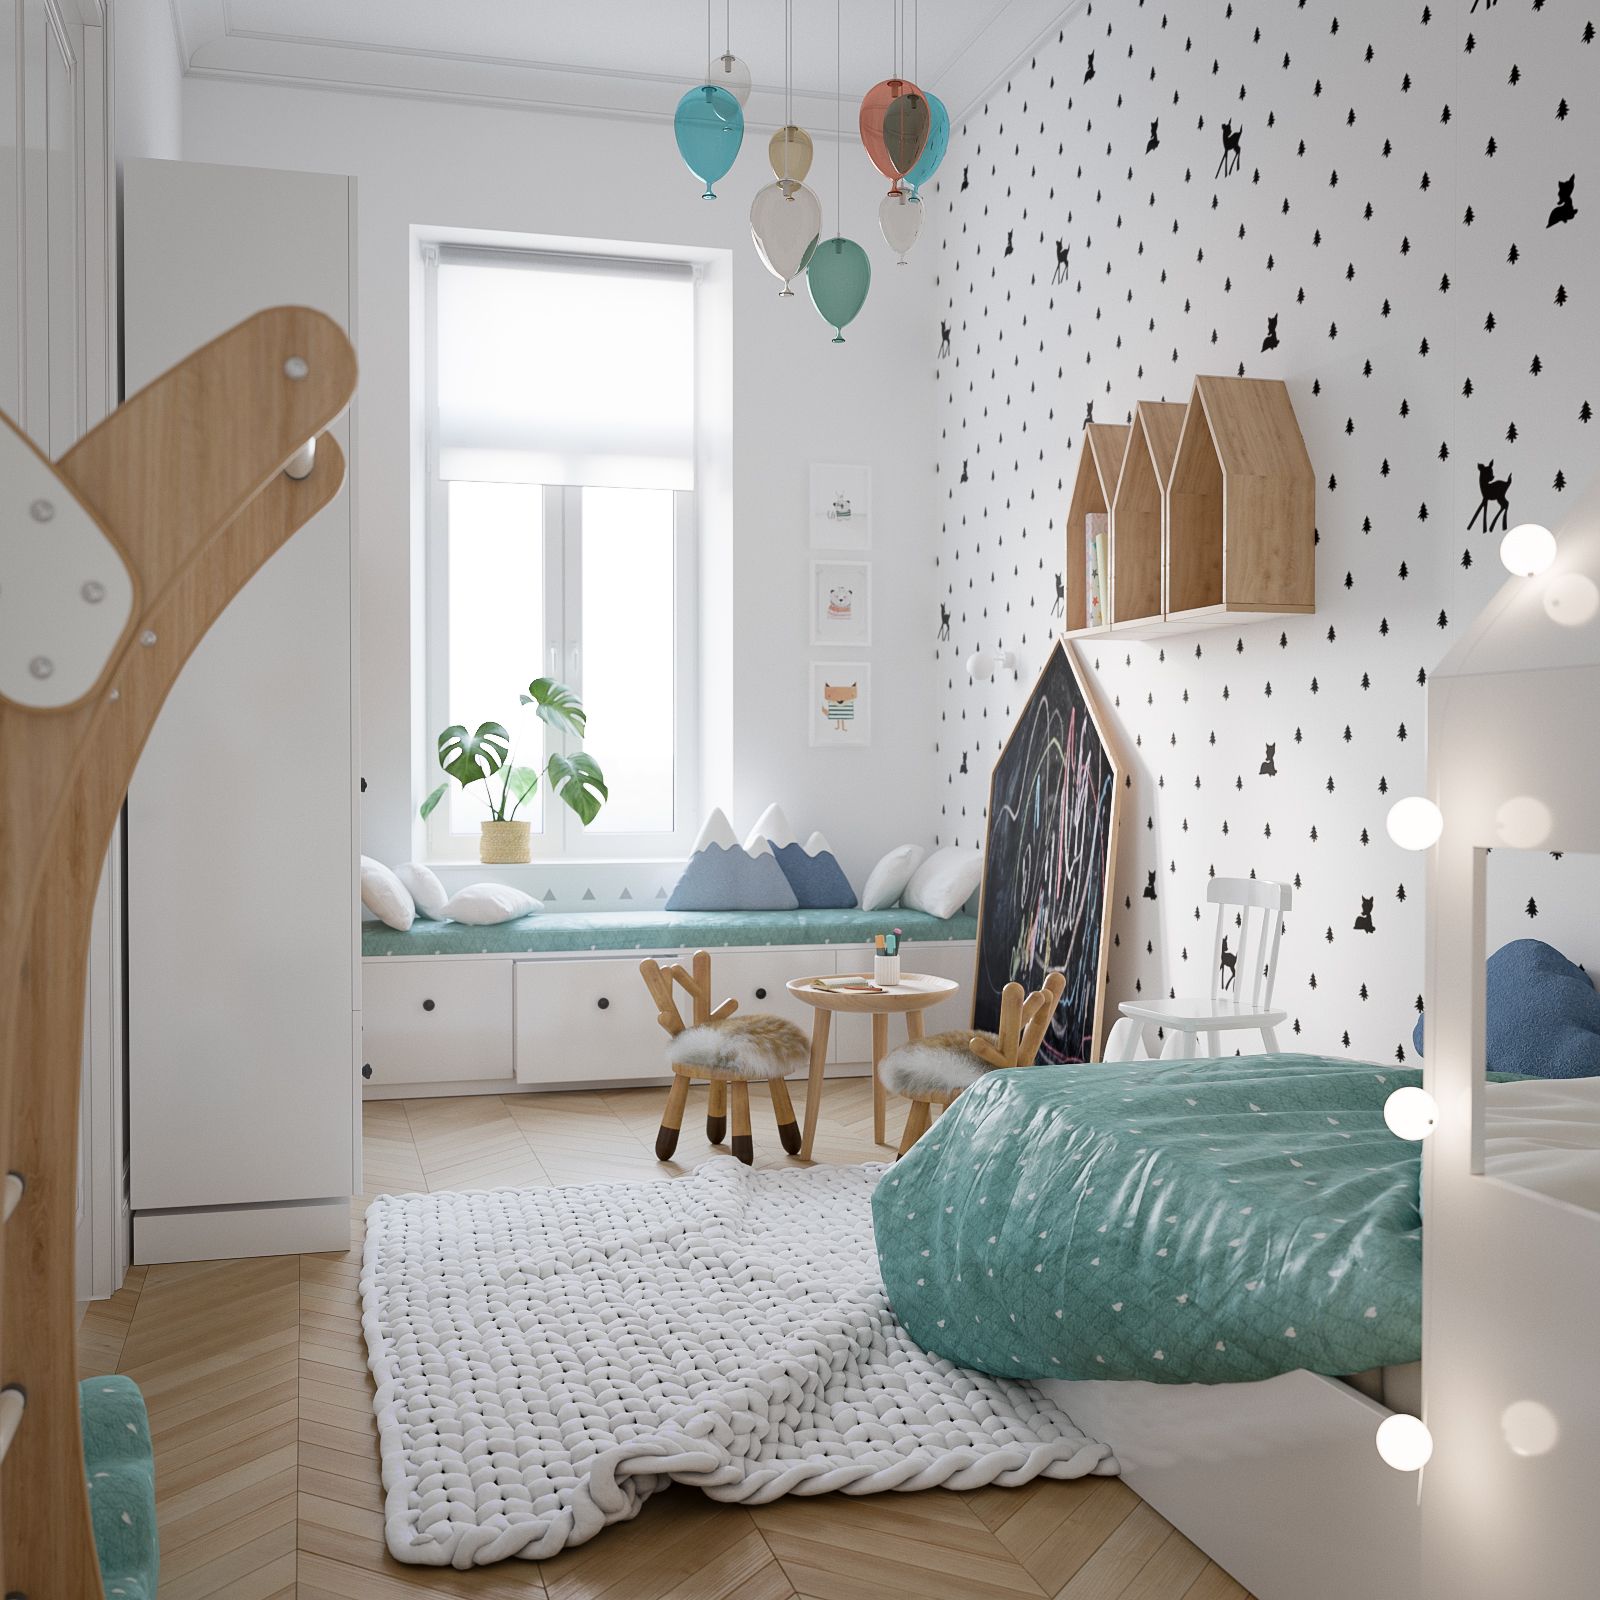 Best 10 Tips For Kids Room Interior Design